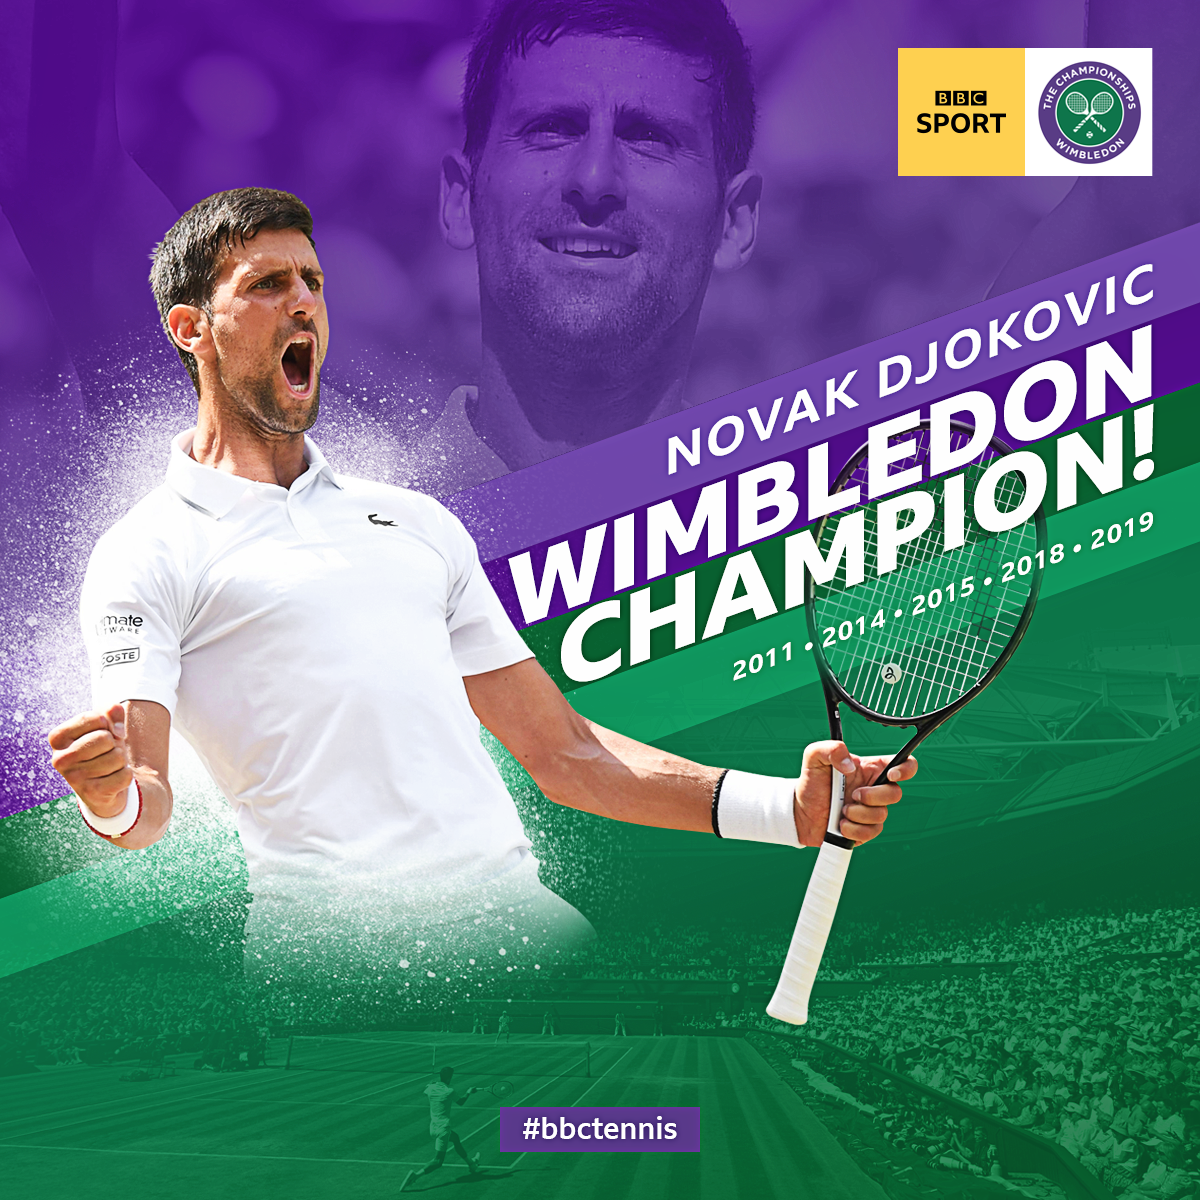 Watch live Wimbledon 2019 Mens final - Roger Federer v Novak Djokovic - Live